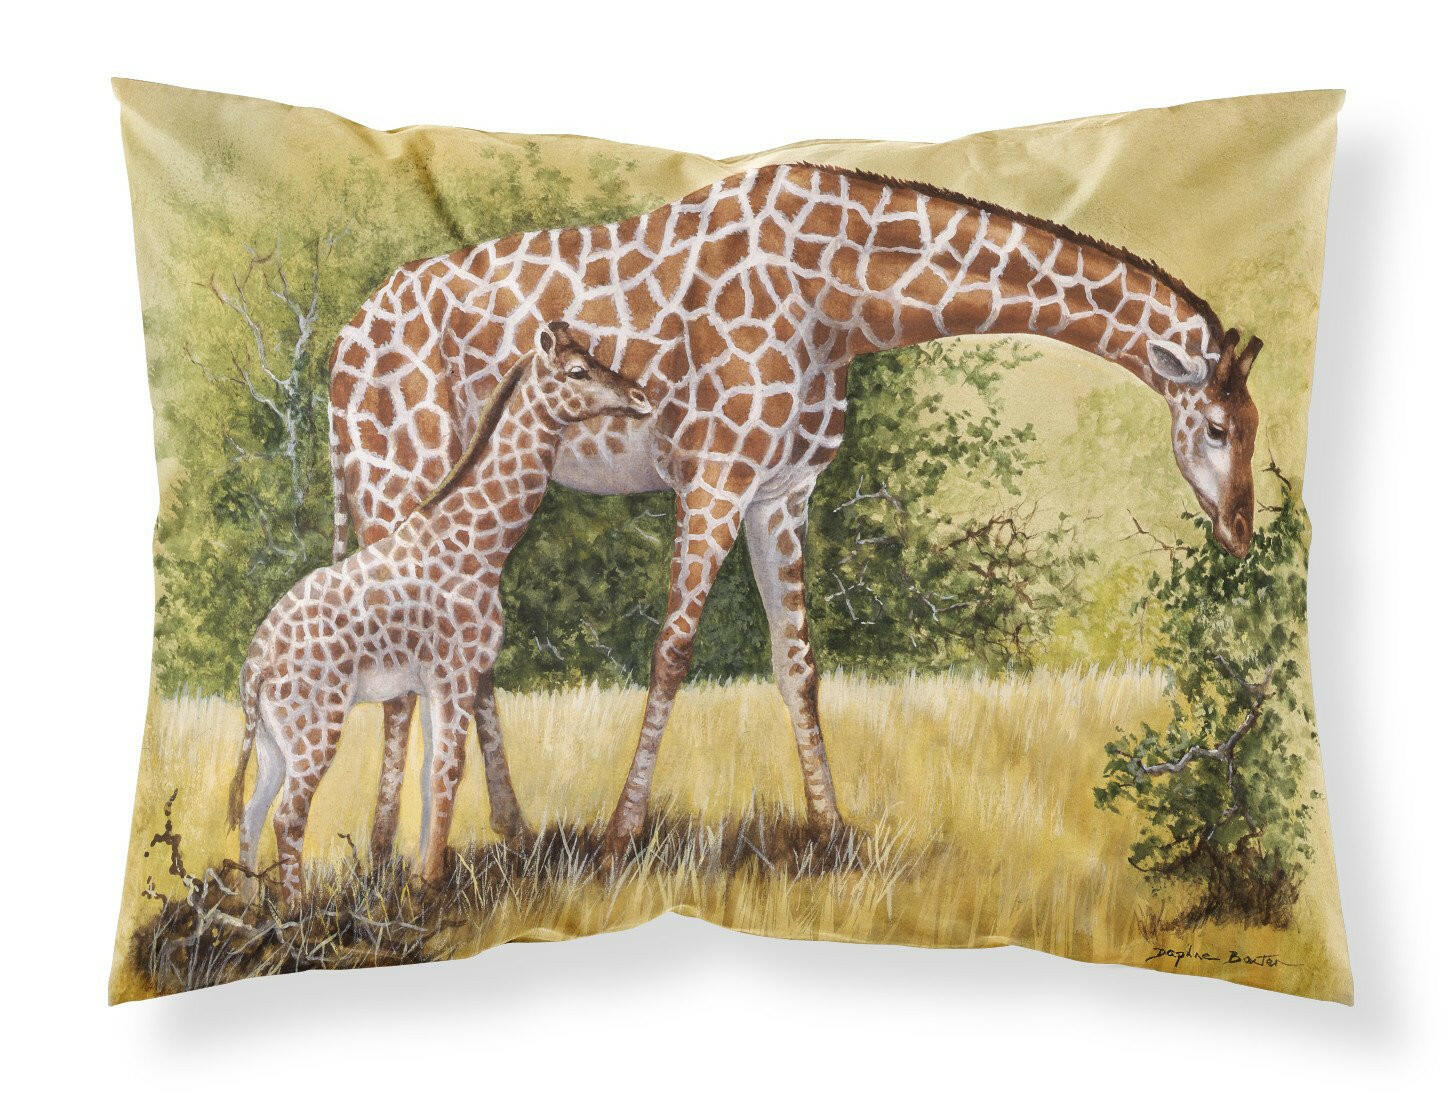 Giraffes by Daphne Baxter Fabric Standard Pillowcase BDBA0309PILLOWCASE by Caroline's Treasures